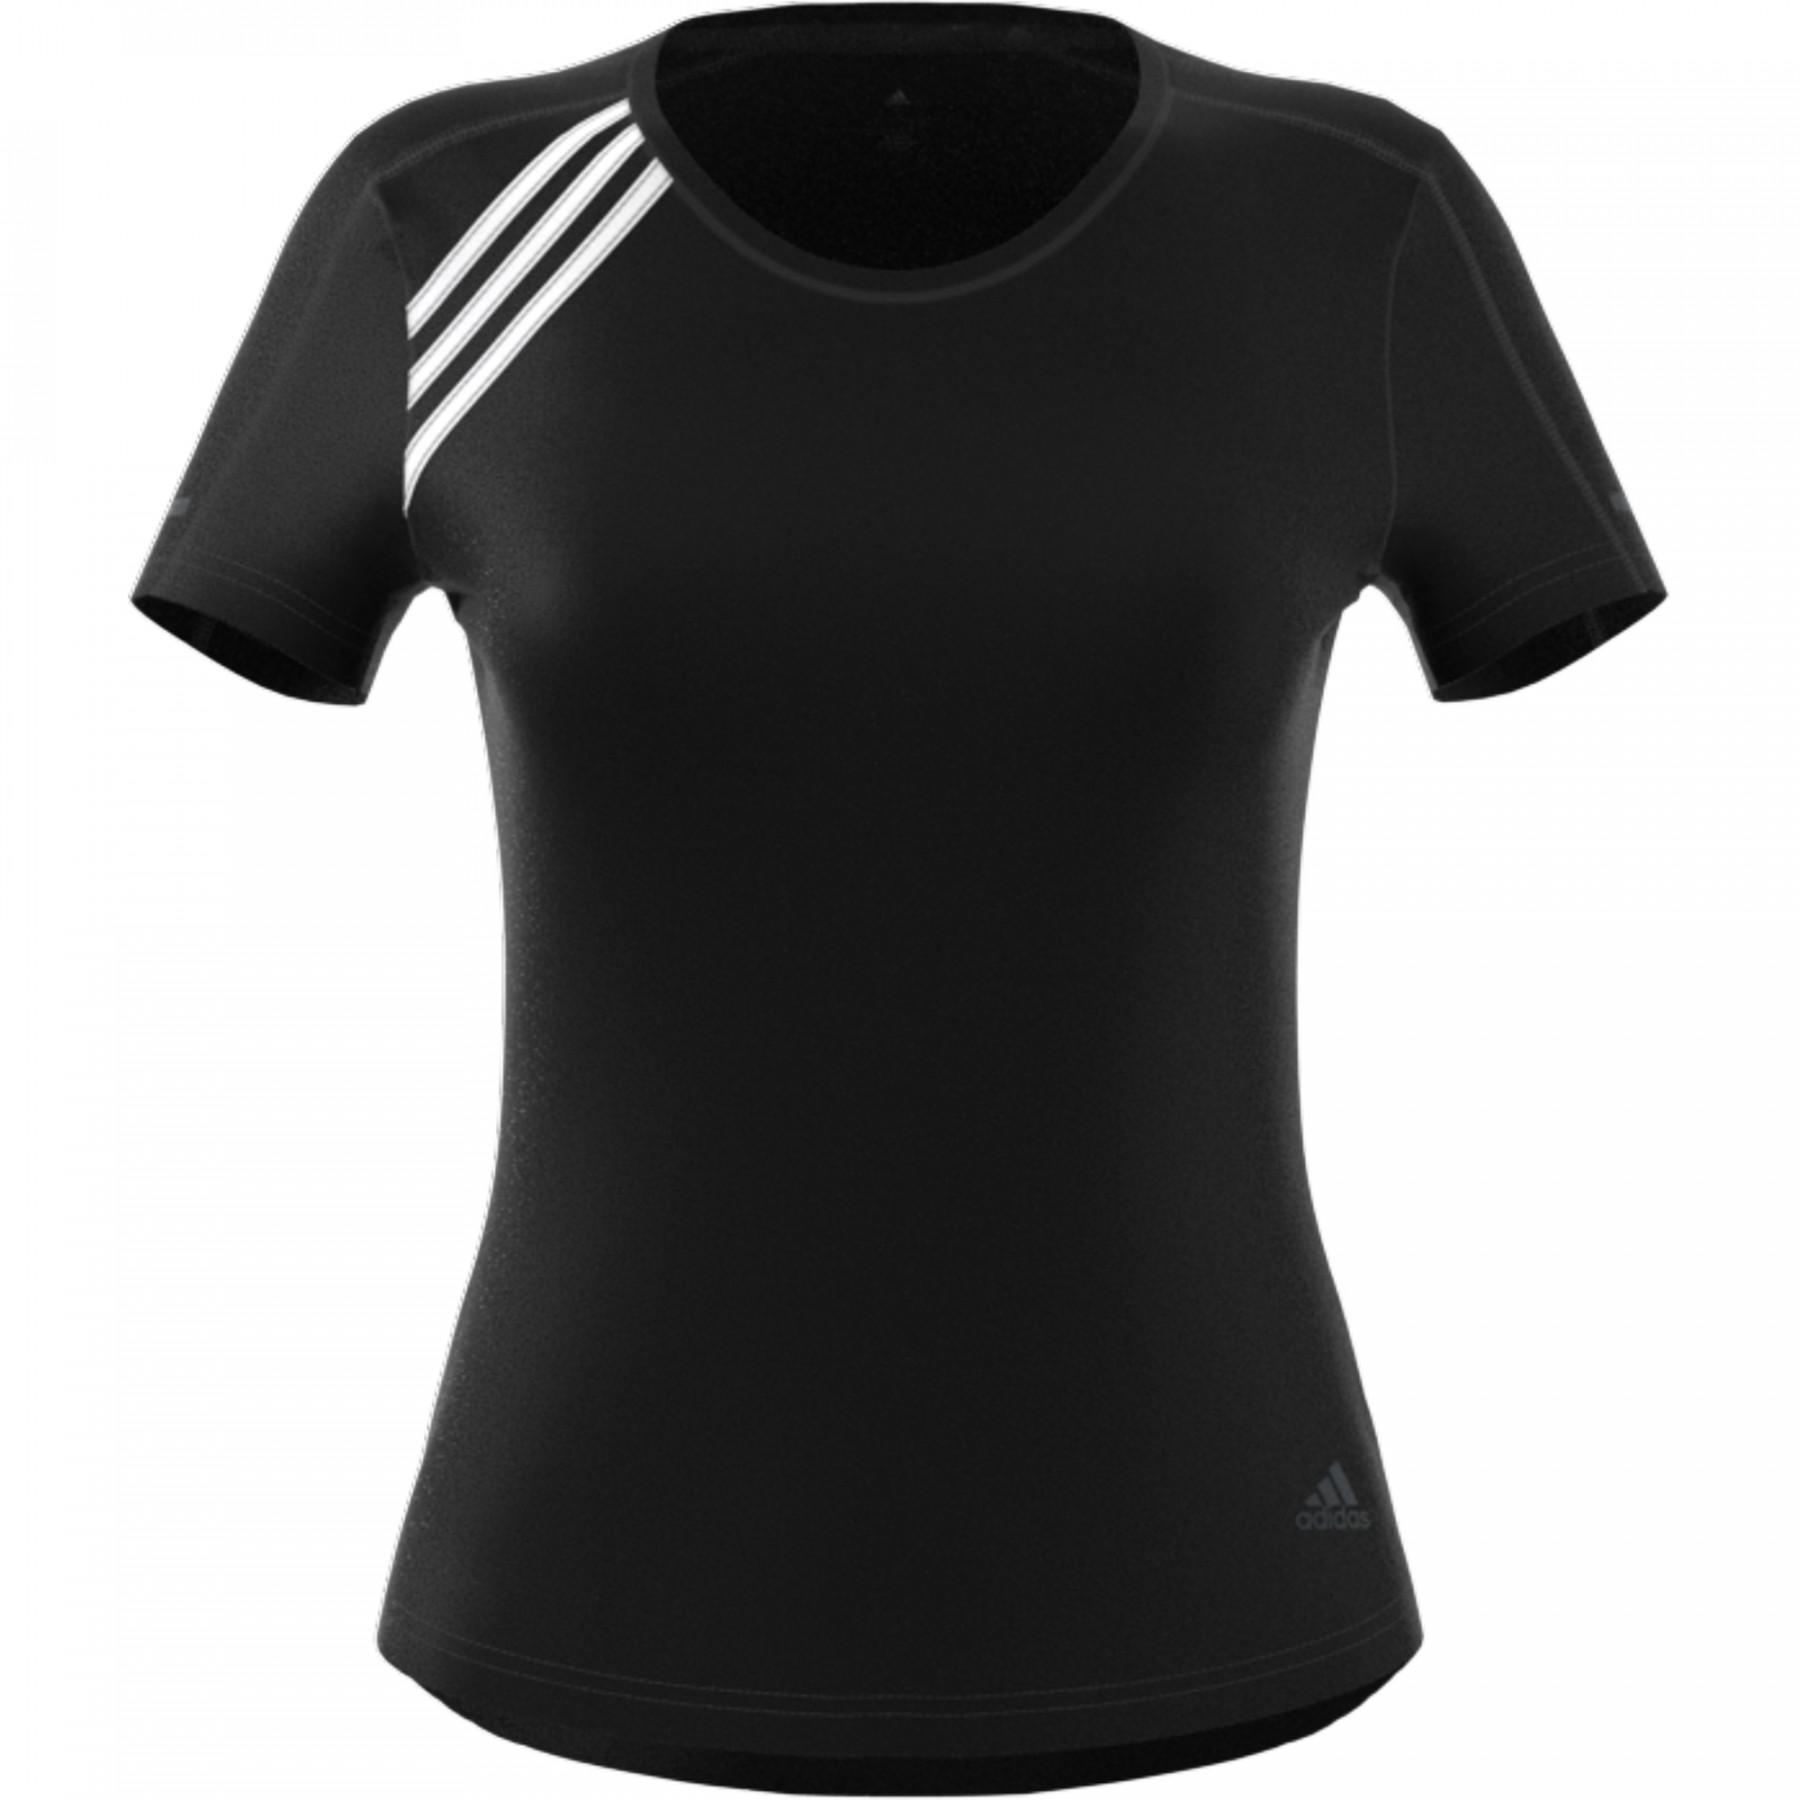 Camiseta feminina adidas 3-Stripes Run